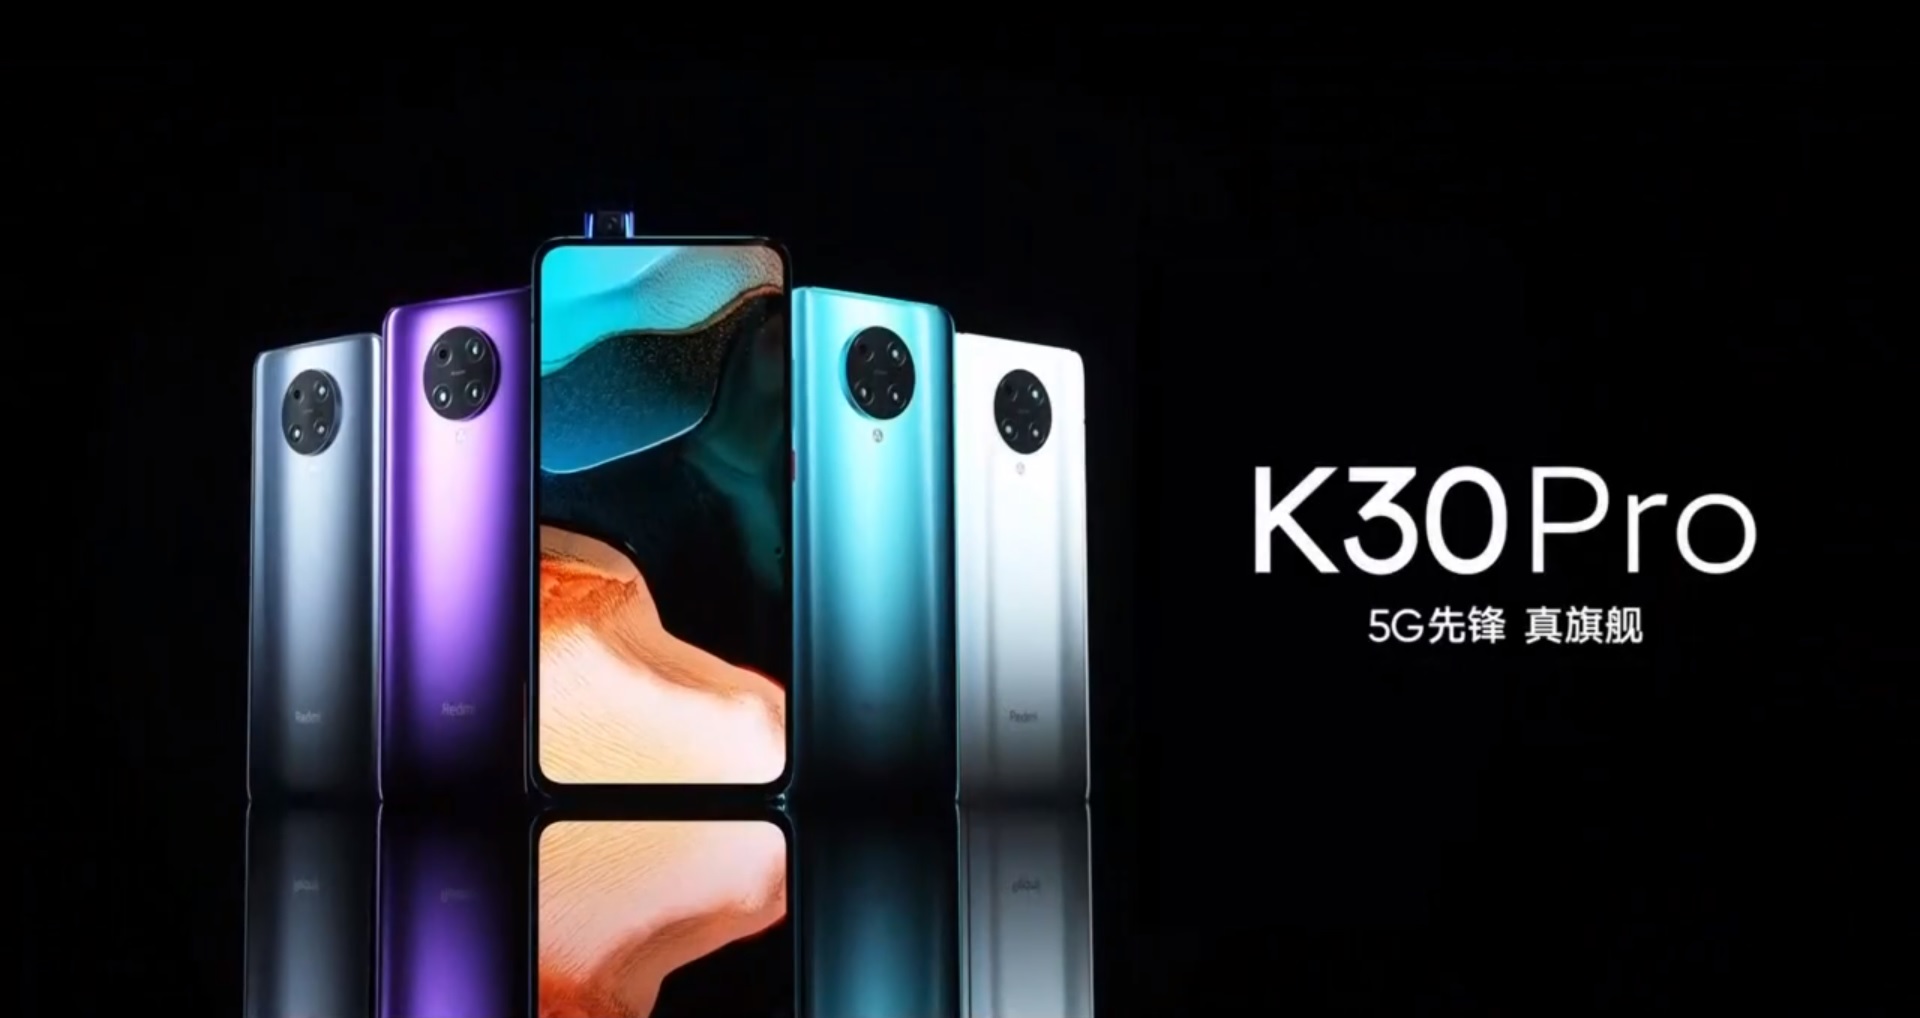 Redmi K30 Pro smartphone